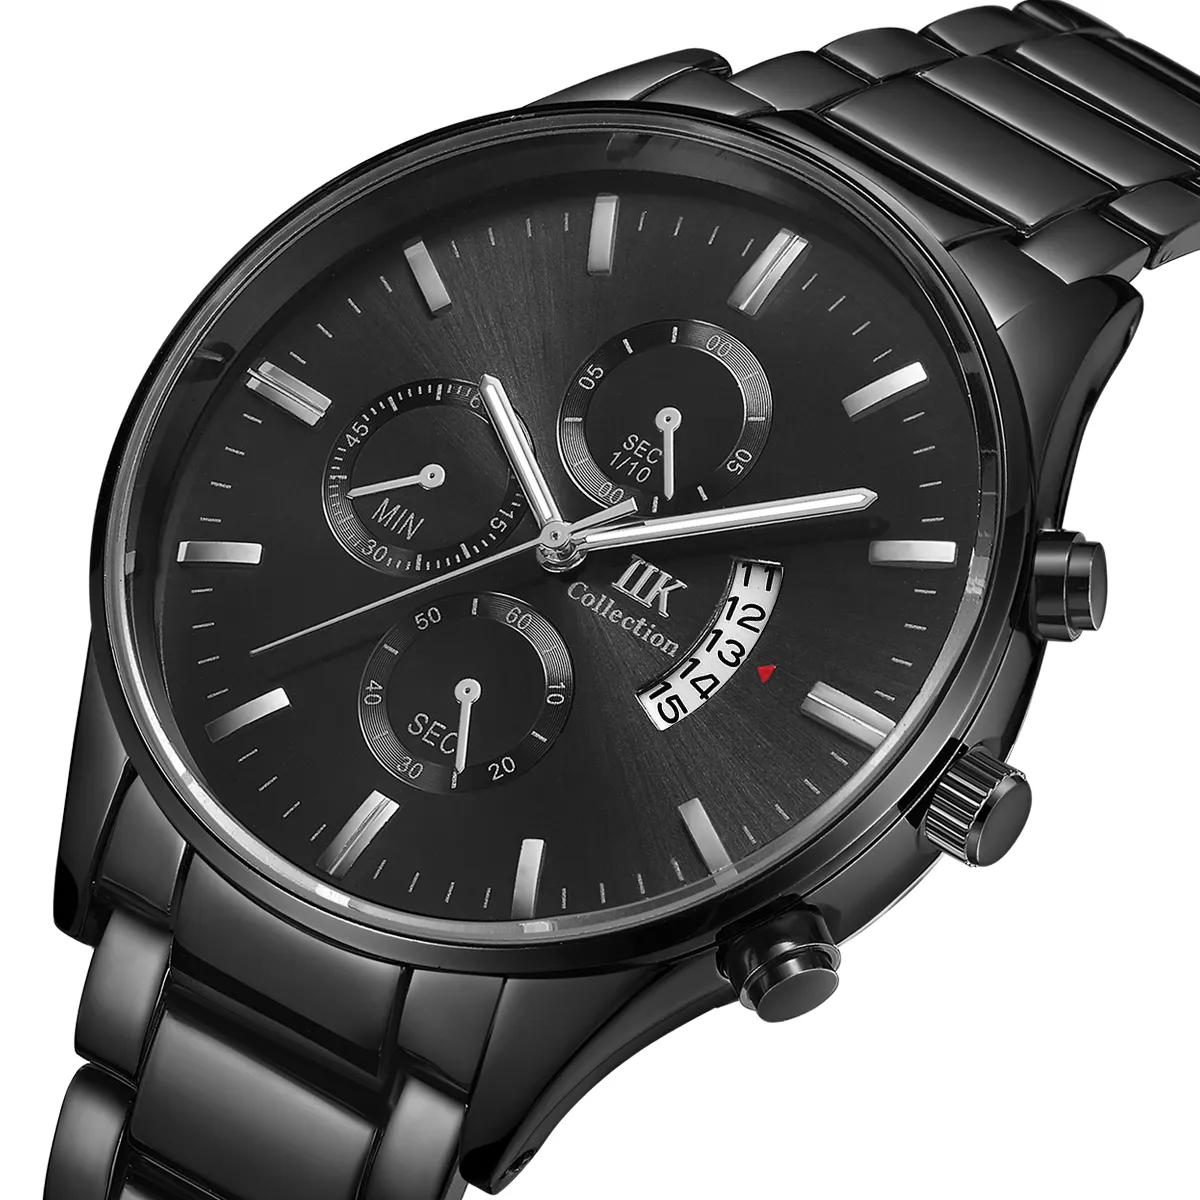 Fabriek Voorraden Iik Horloge 1342 Clear Dial Datum Tonen 3ATM Waterdichte China Fashion Zwarte Mens Horloges